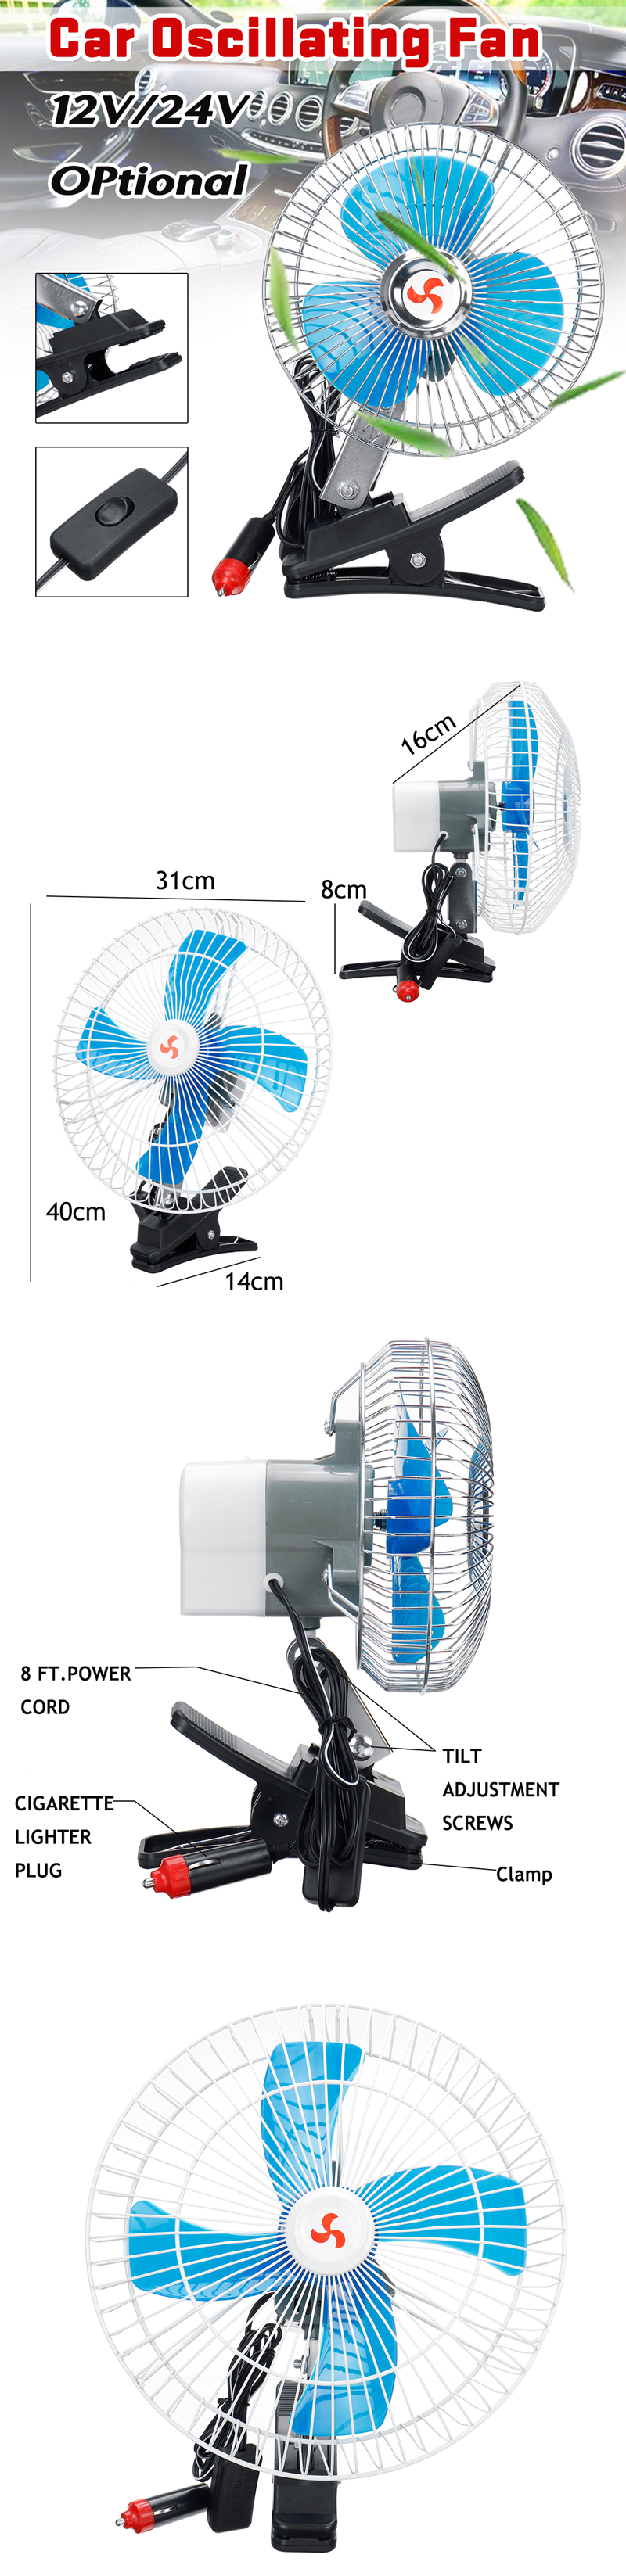 12V/24V Car Oscillating Fan Camping Travel Portable Clip Cooling Conditioner Fan